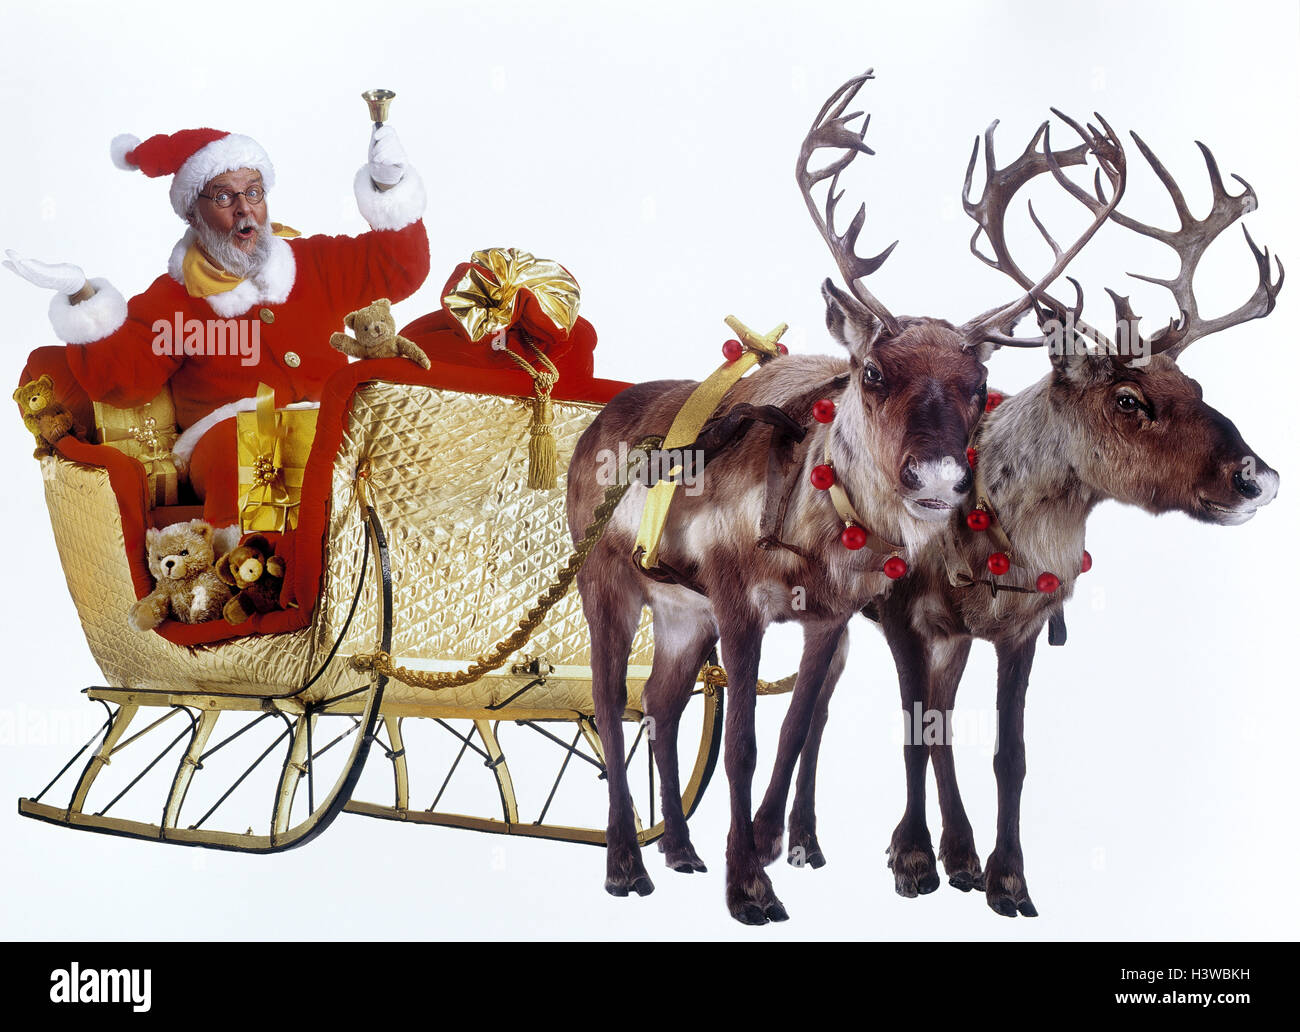 Pensioner's slides, Santa Claus, bell, gesture, studio, cut out, Christmas, Santa Claus, Santa, ring, yule tide, Christmas, presents Stock Photo